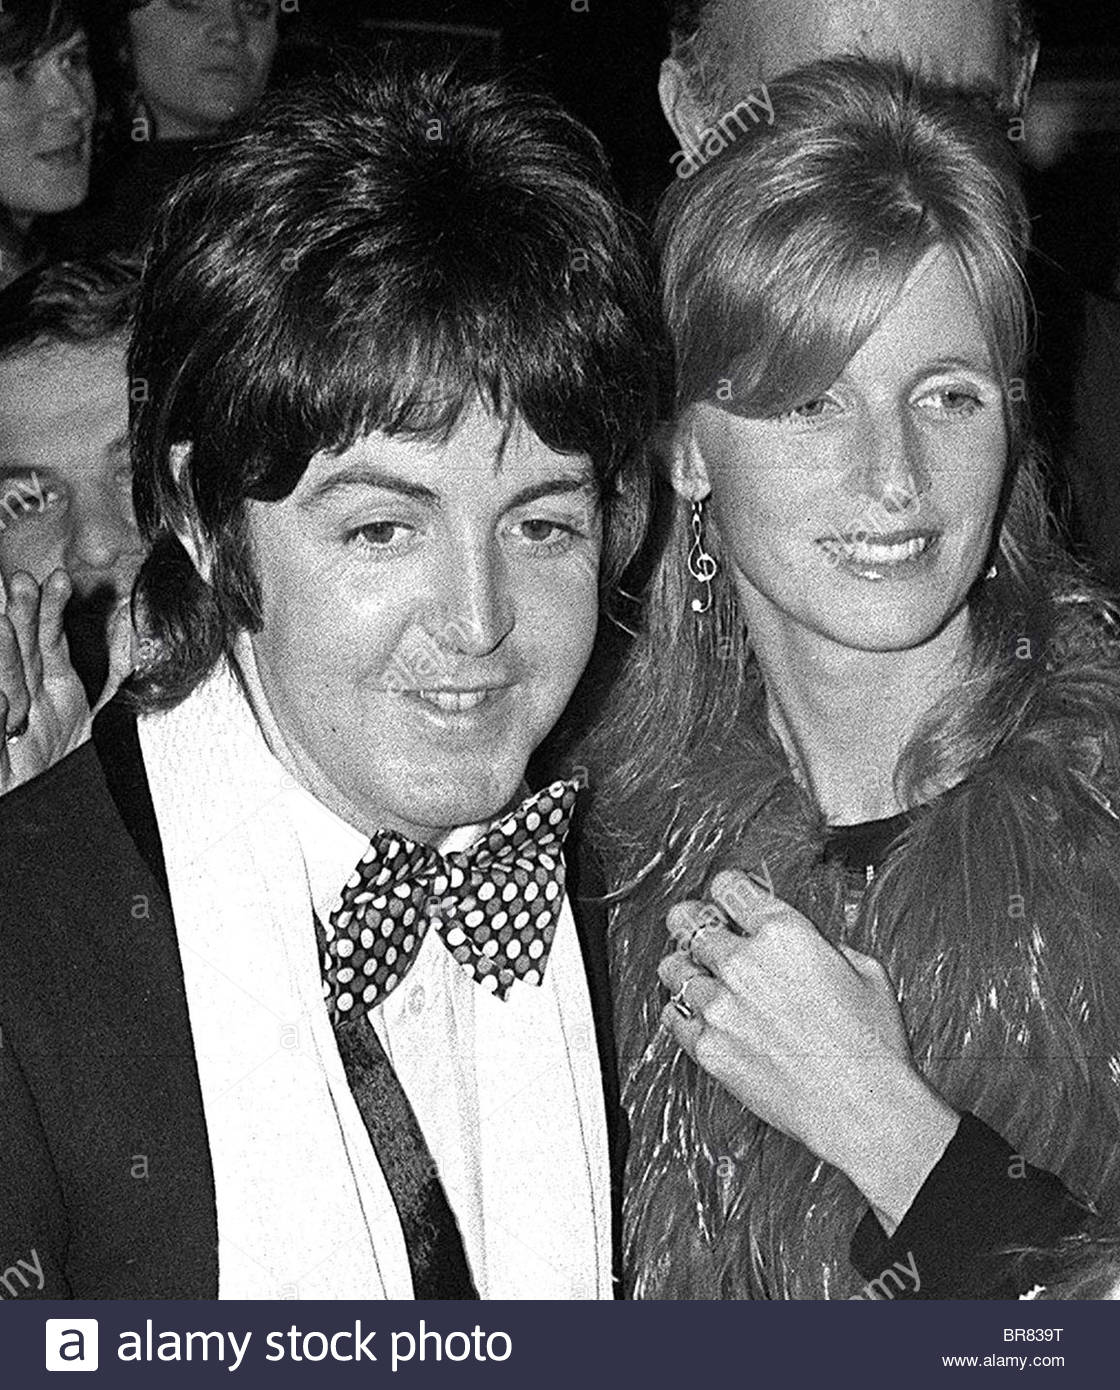 Image result for "Linda McCartney" AND fashion